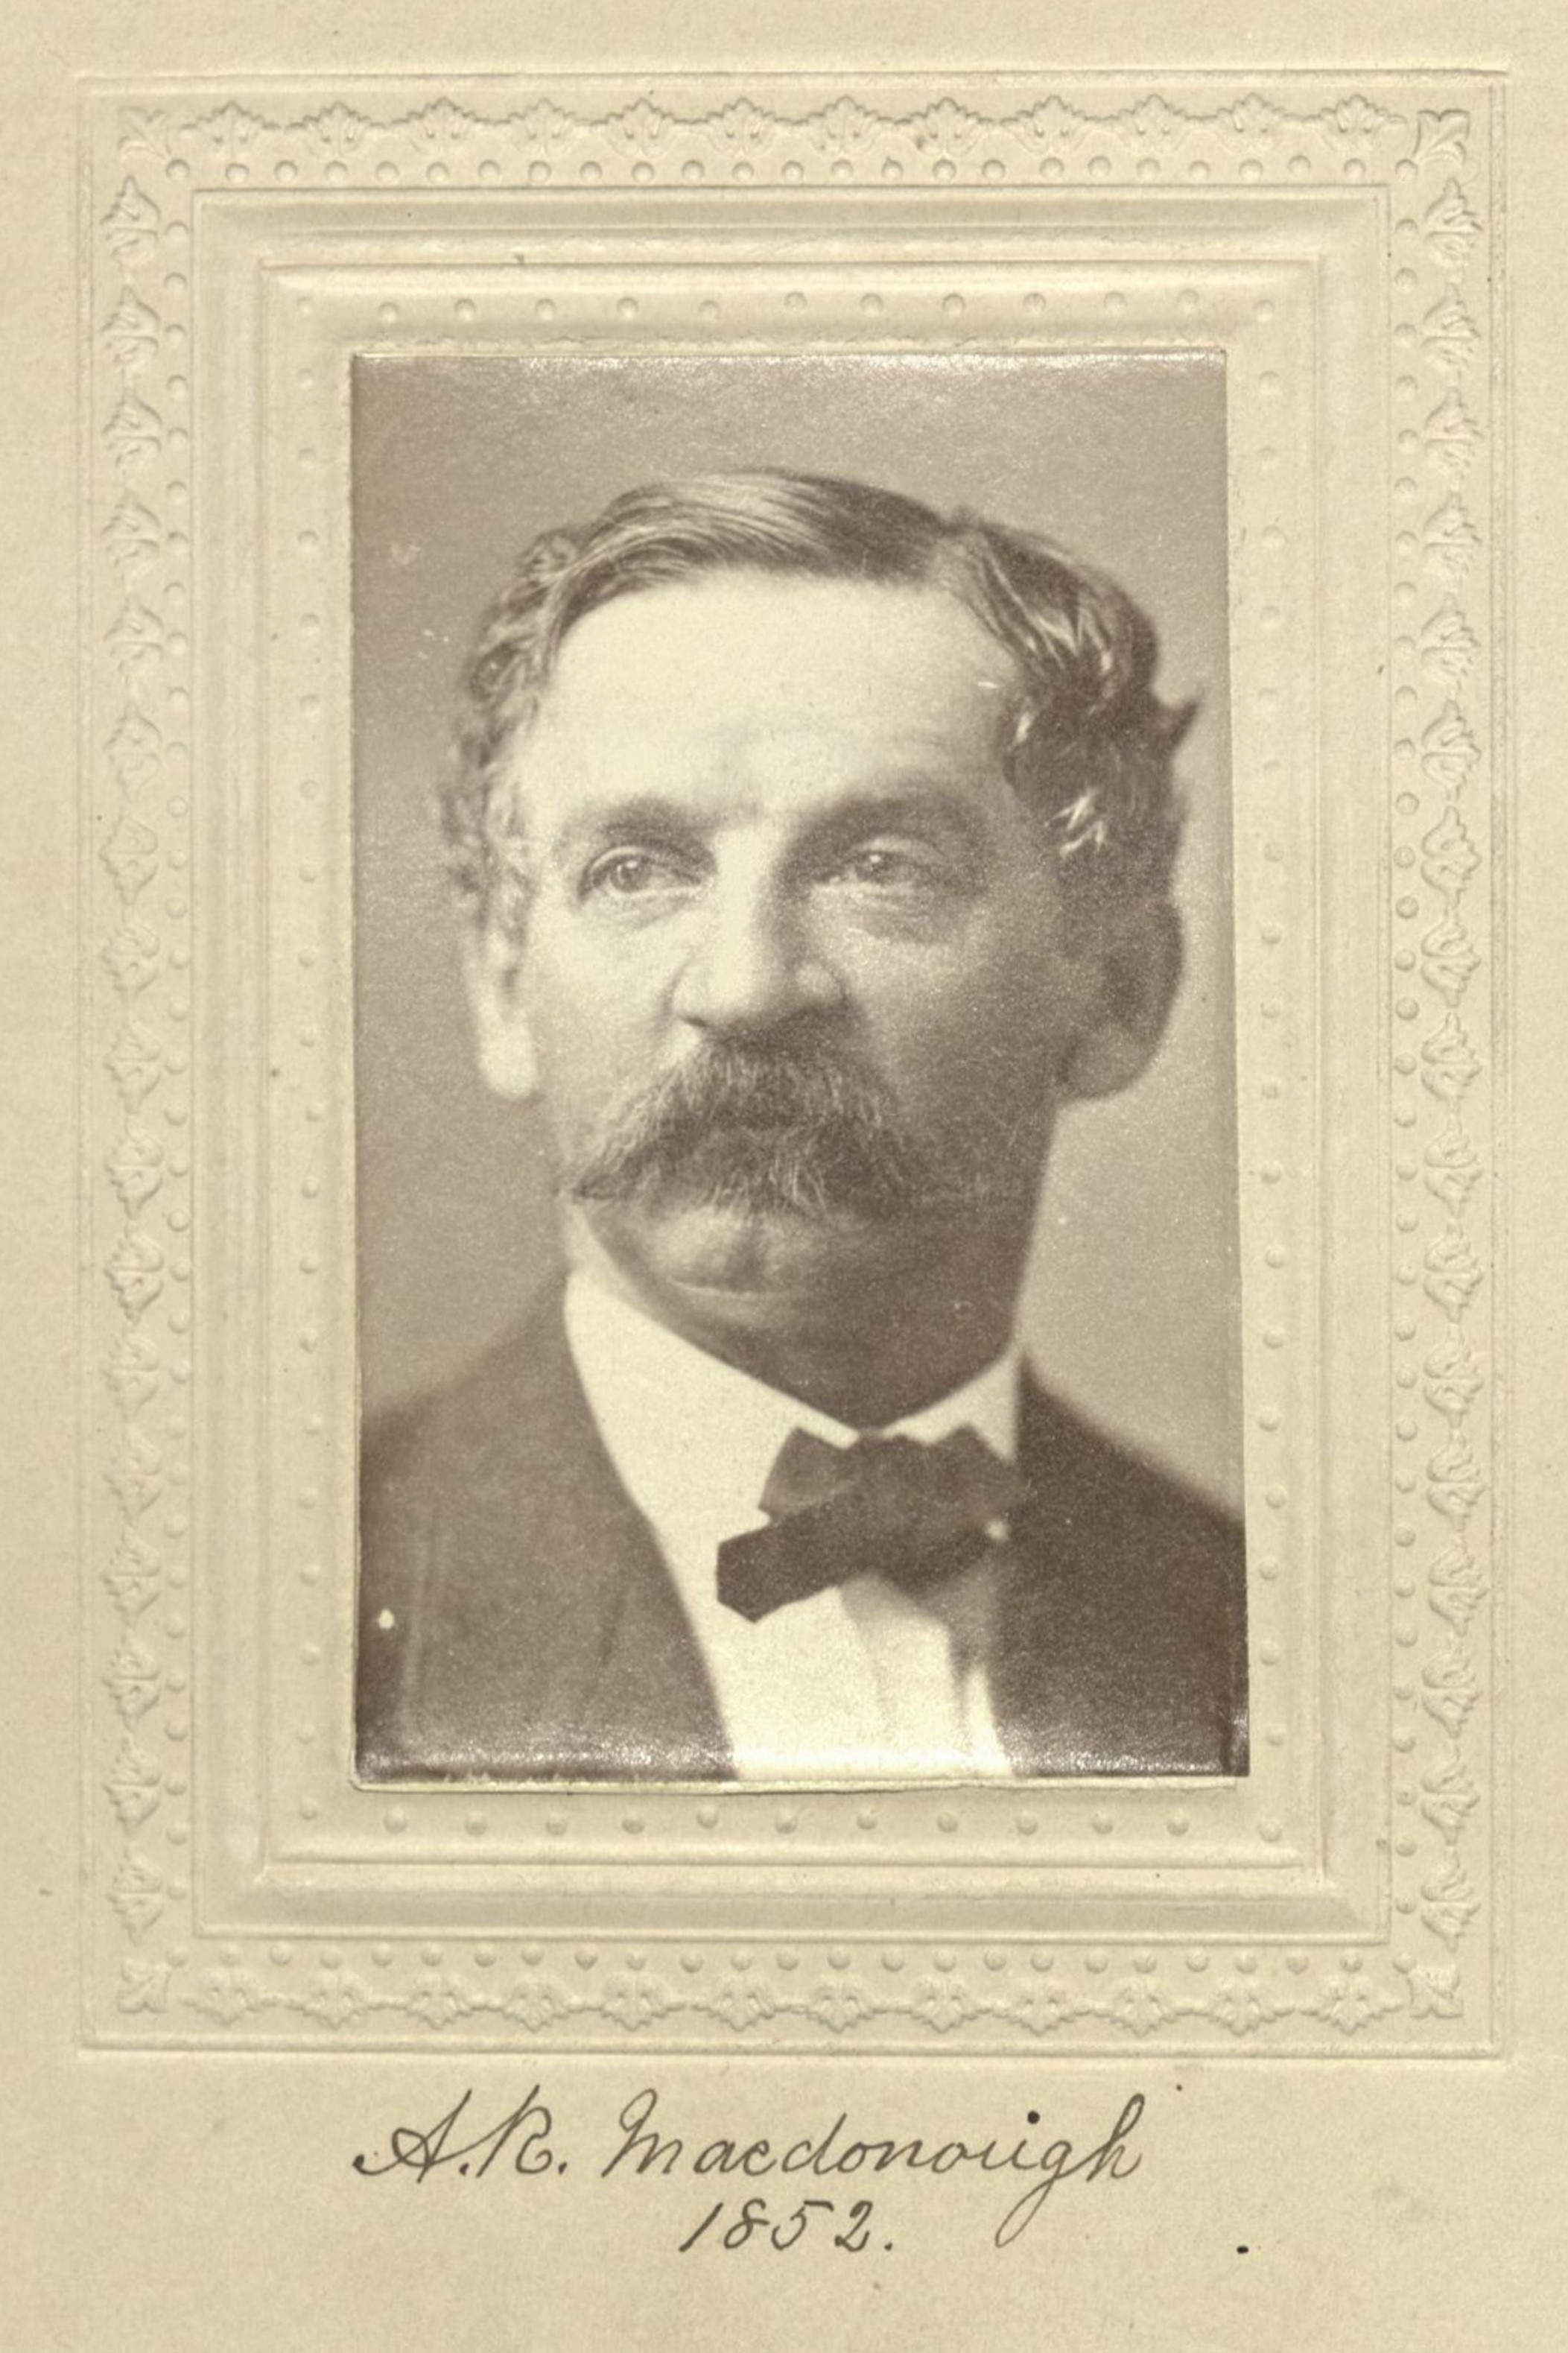 Member portrait of Augustus R. Macdonough